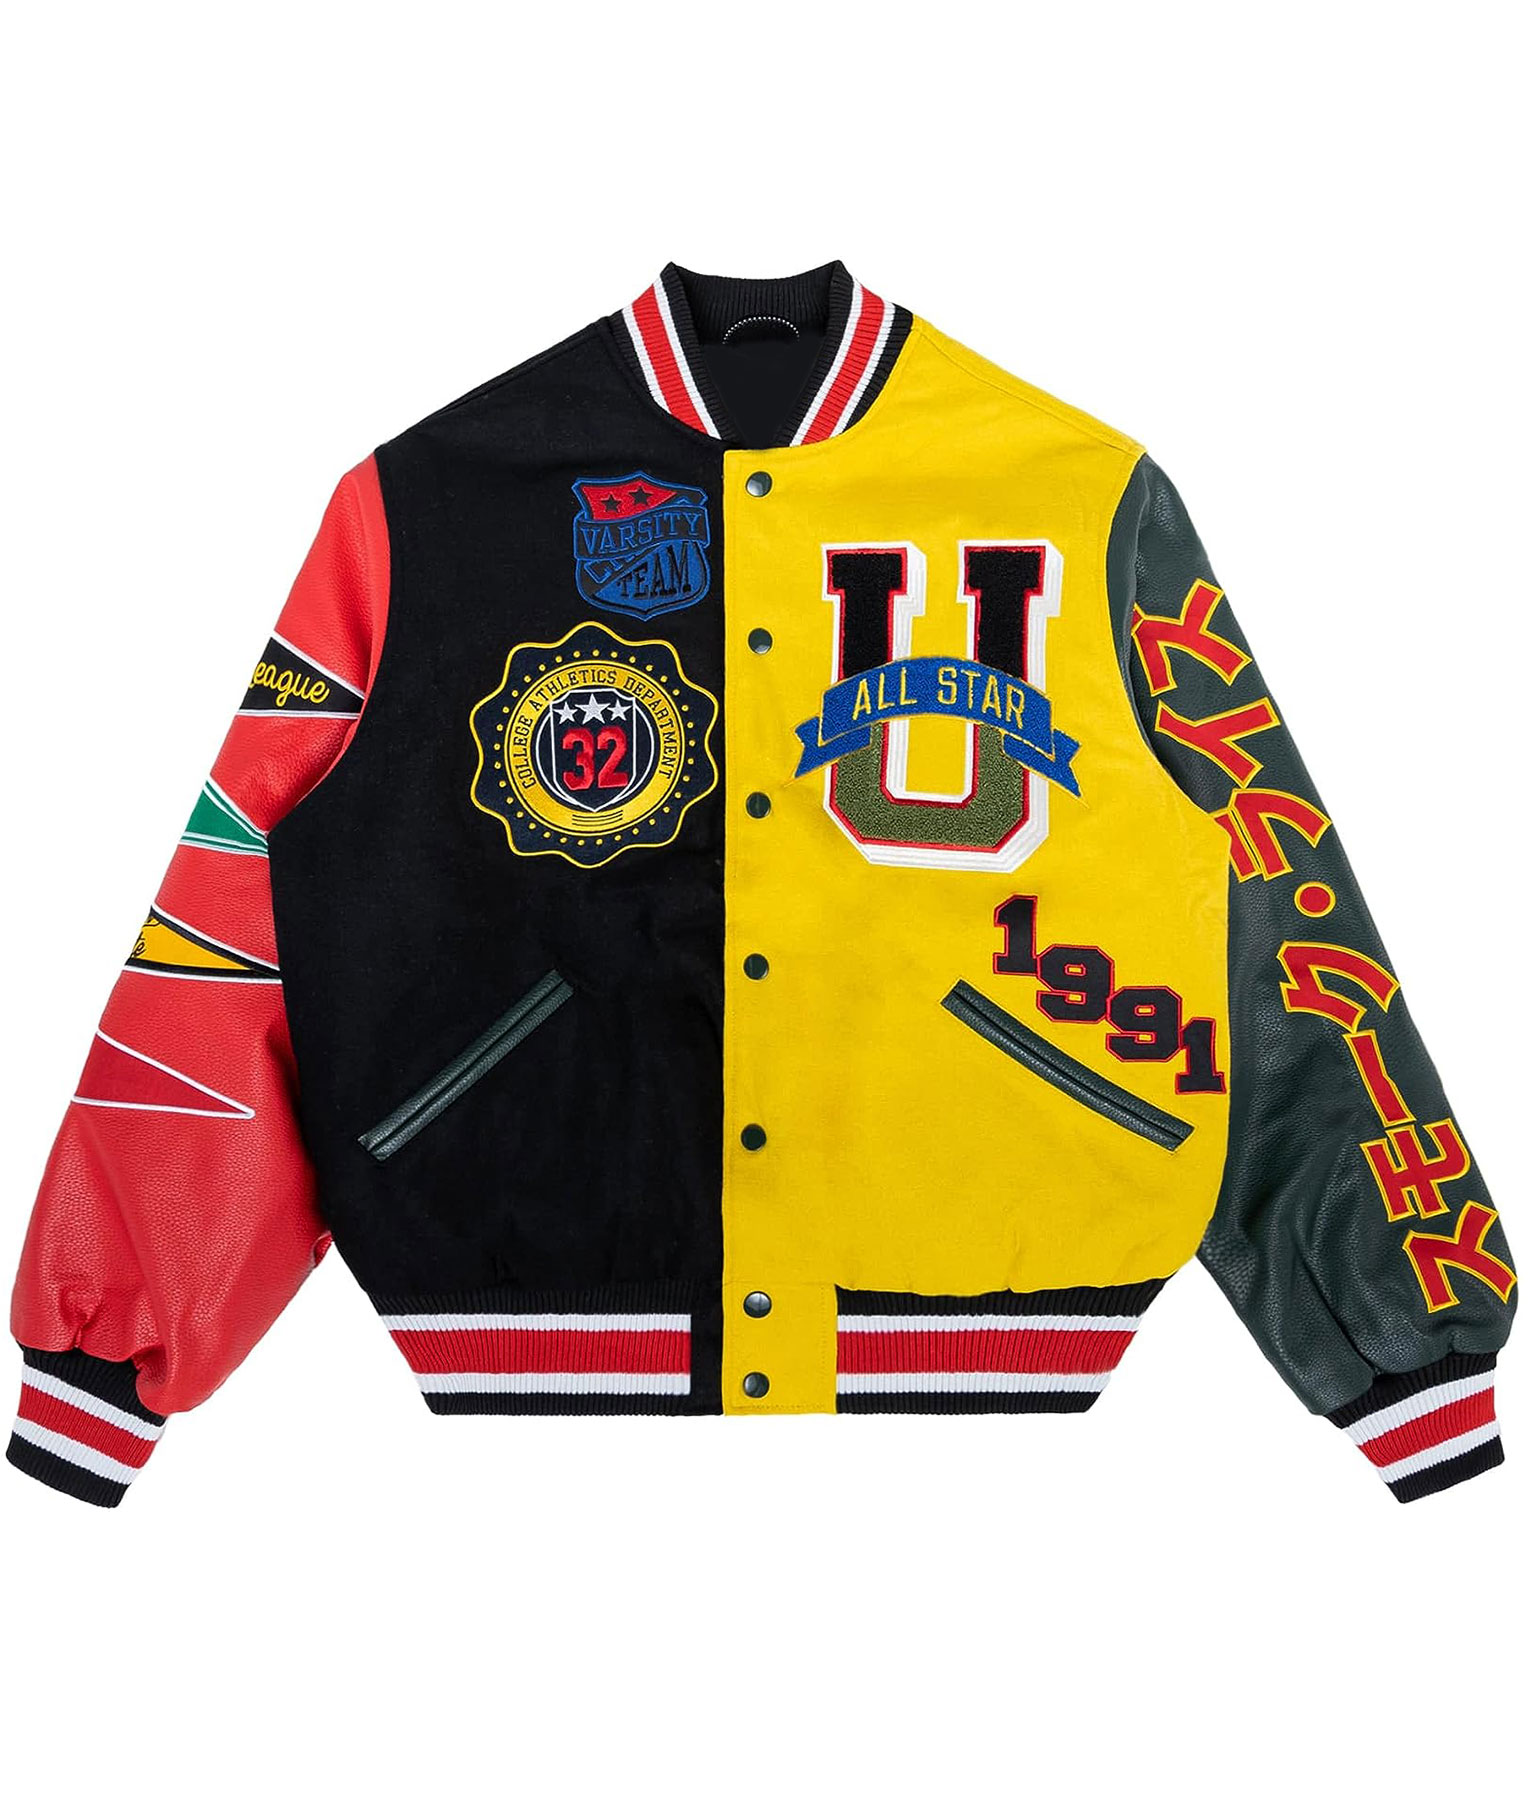 All Star Varsity Jacket (1)